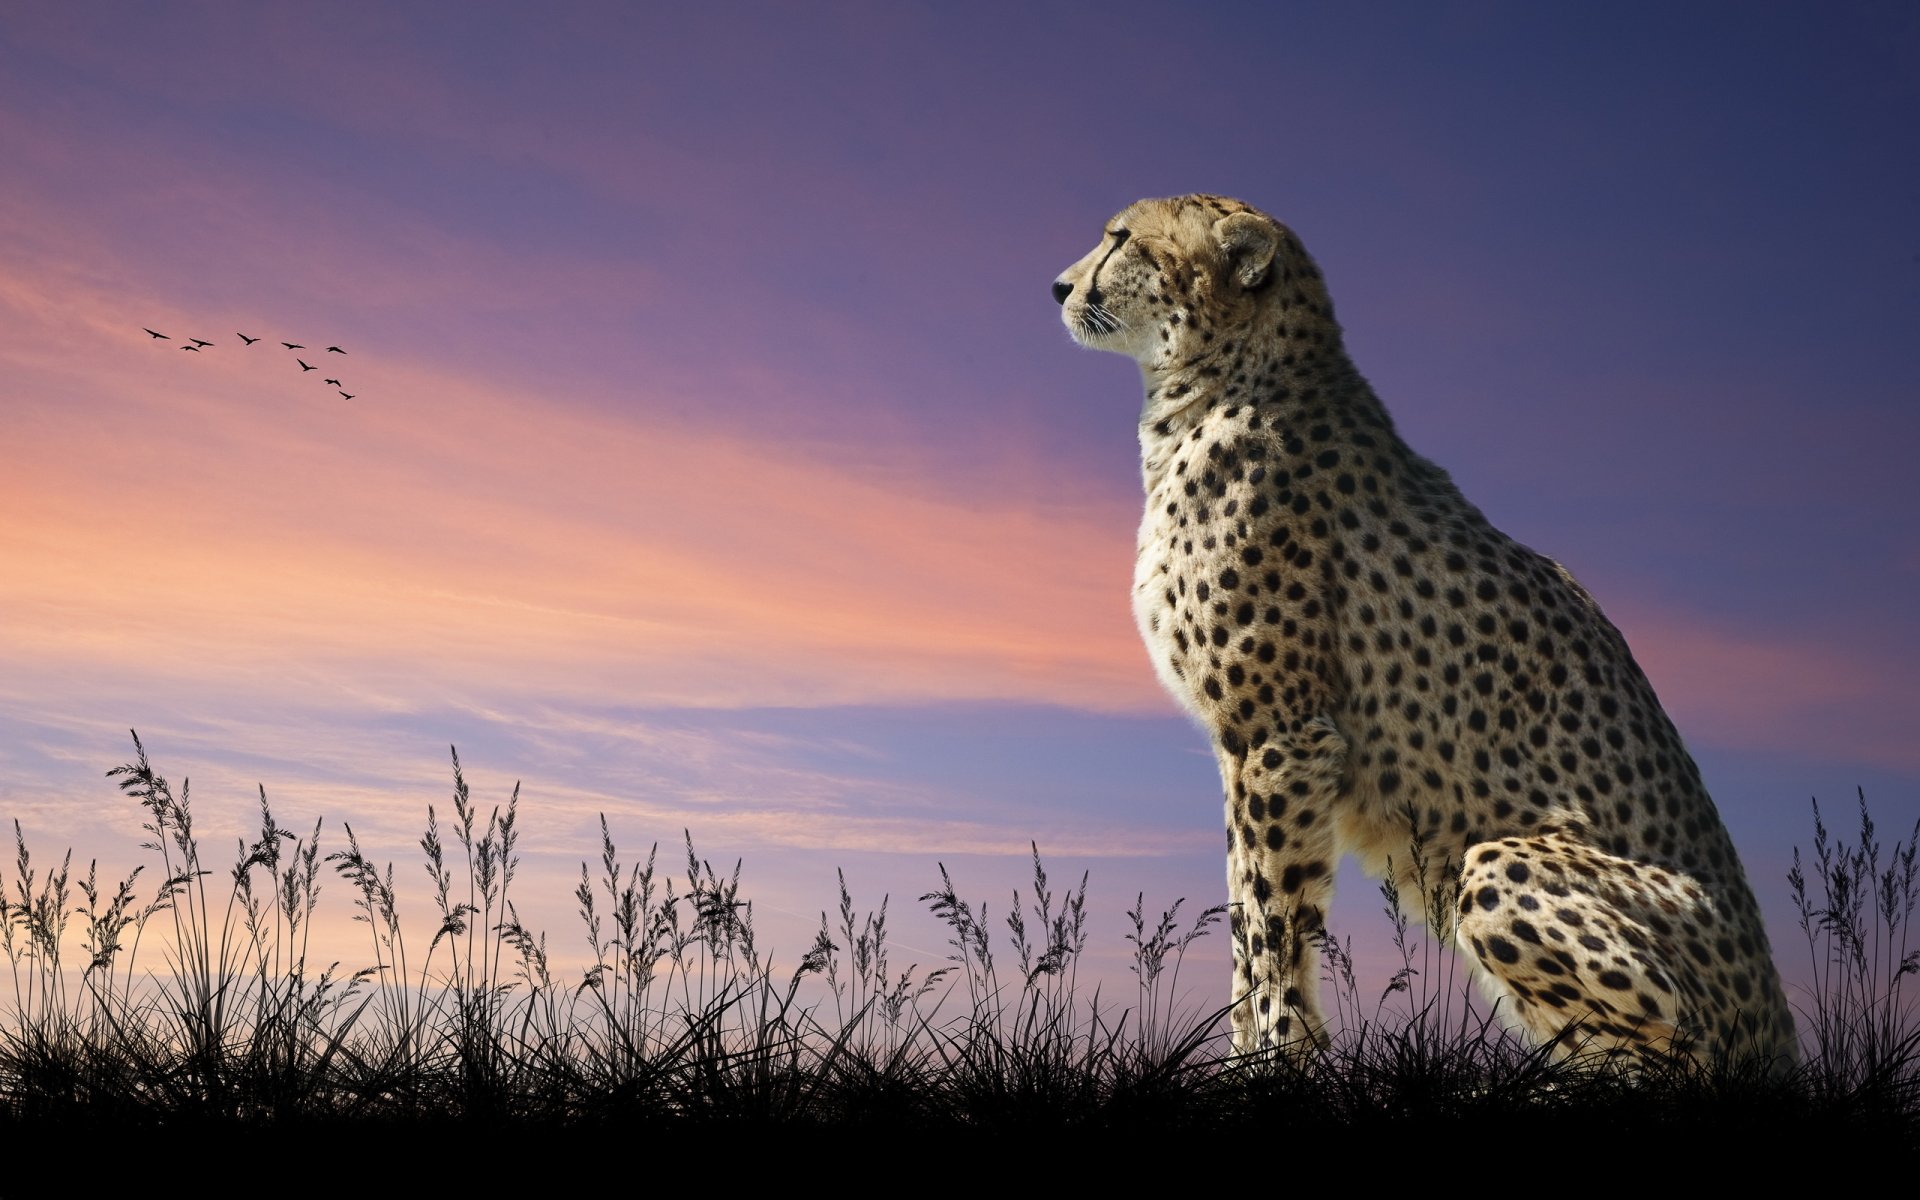 Cheetah Photo